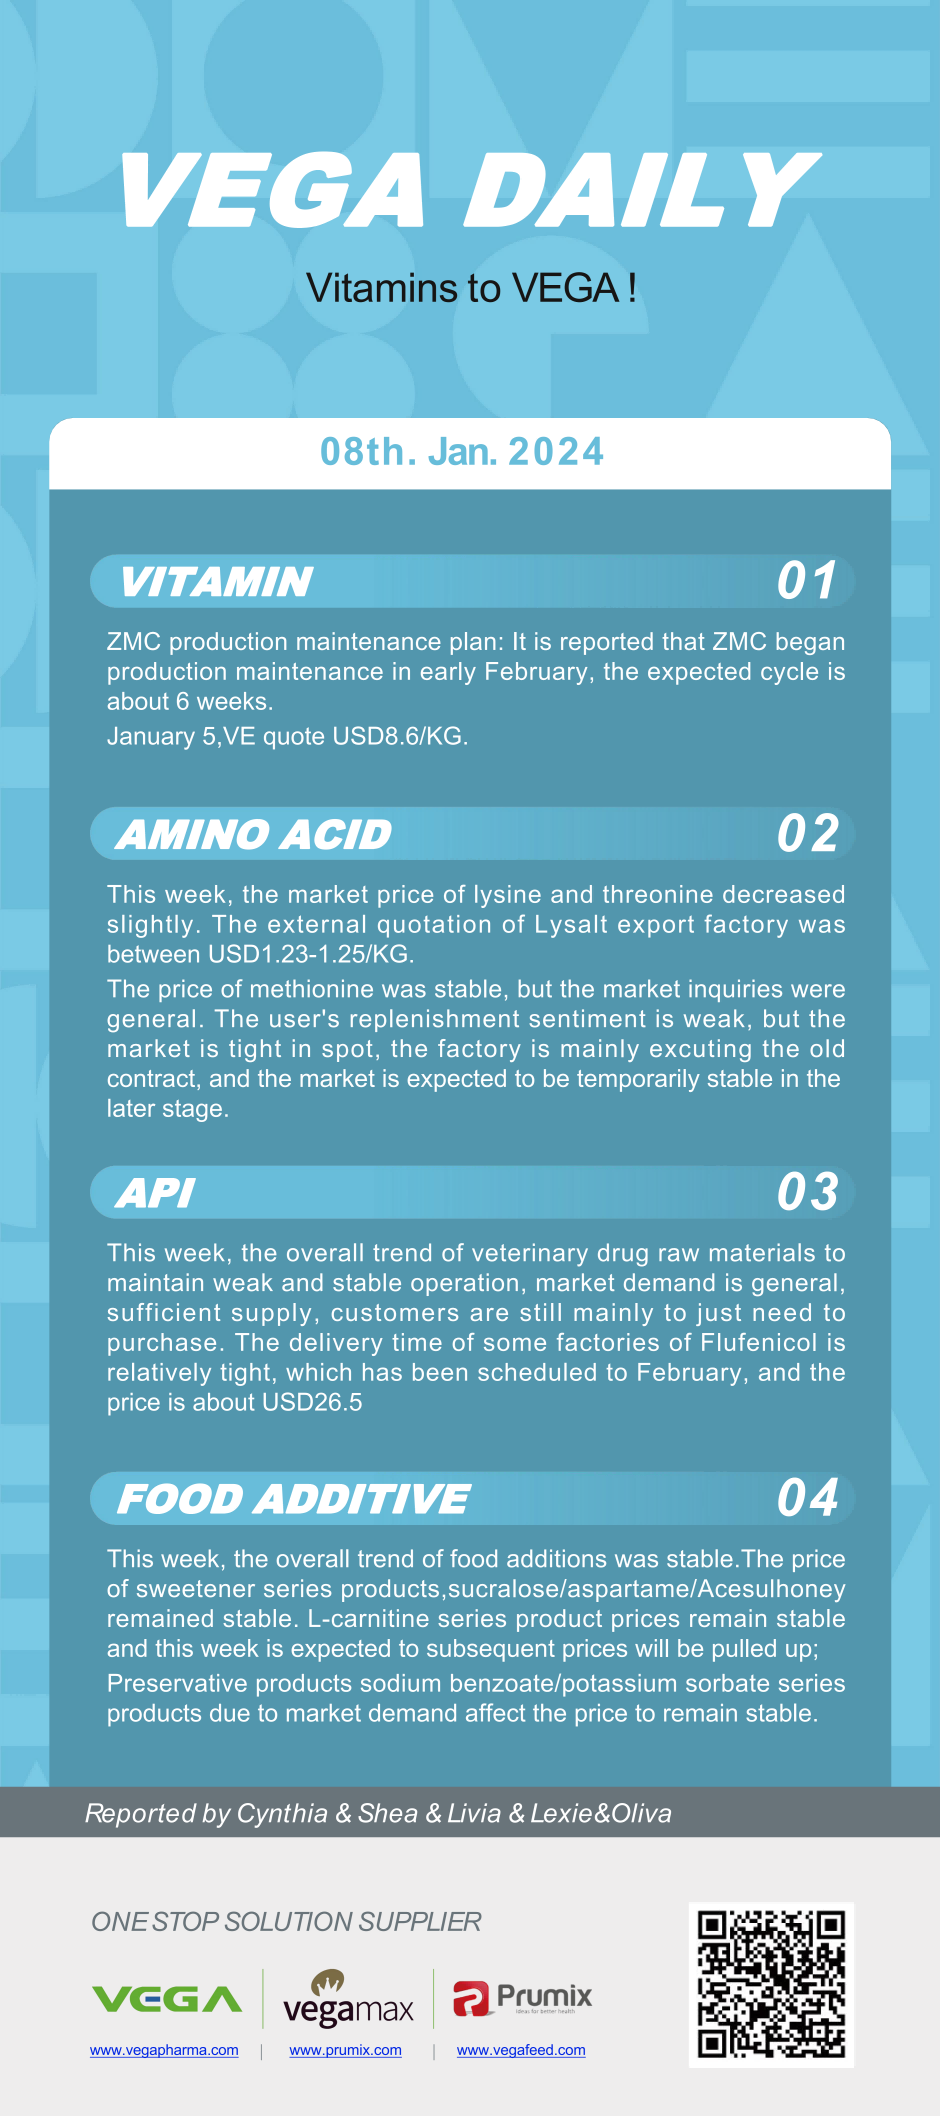 Vega Daily Dated on Jan 8th 2024 Vitamin Amino Acid APl Food Additives.png